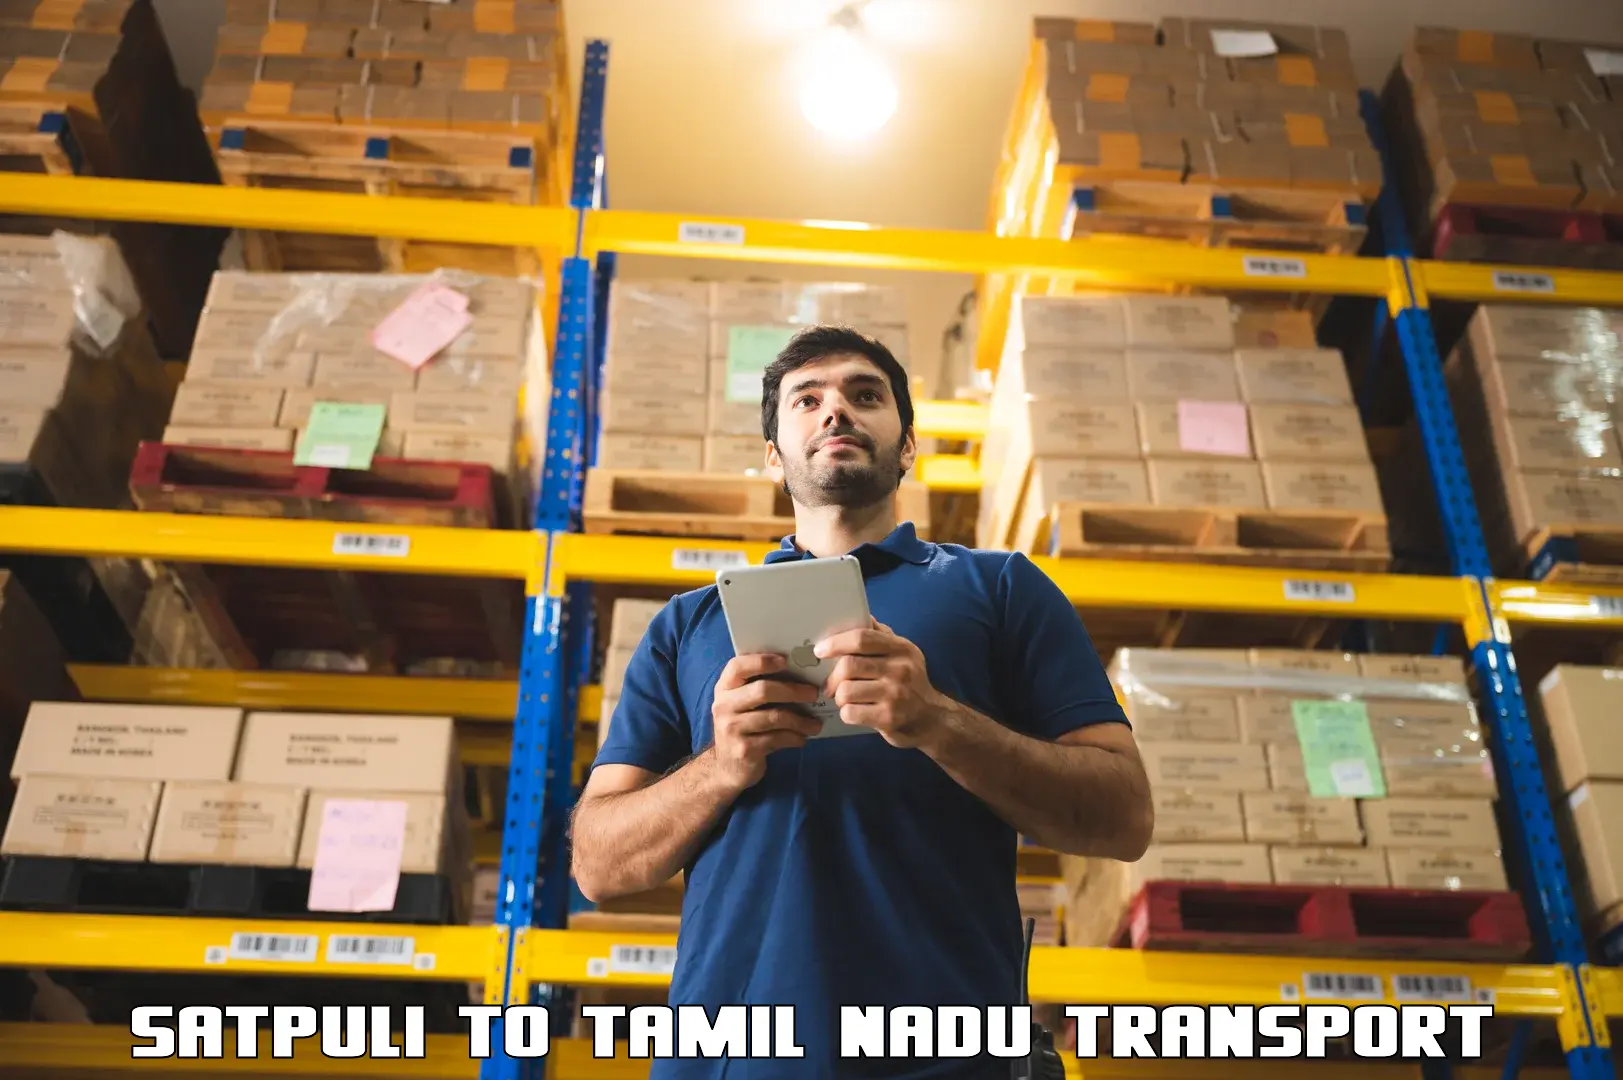 Online transport booking Satpuli to Tamil Nadu